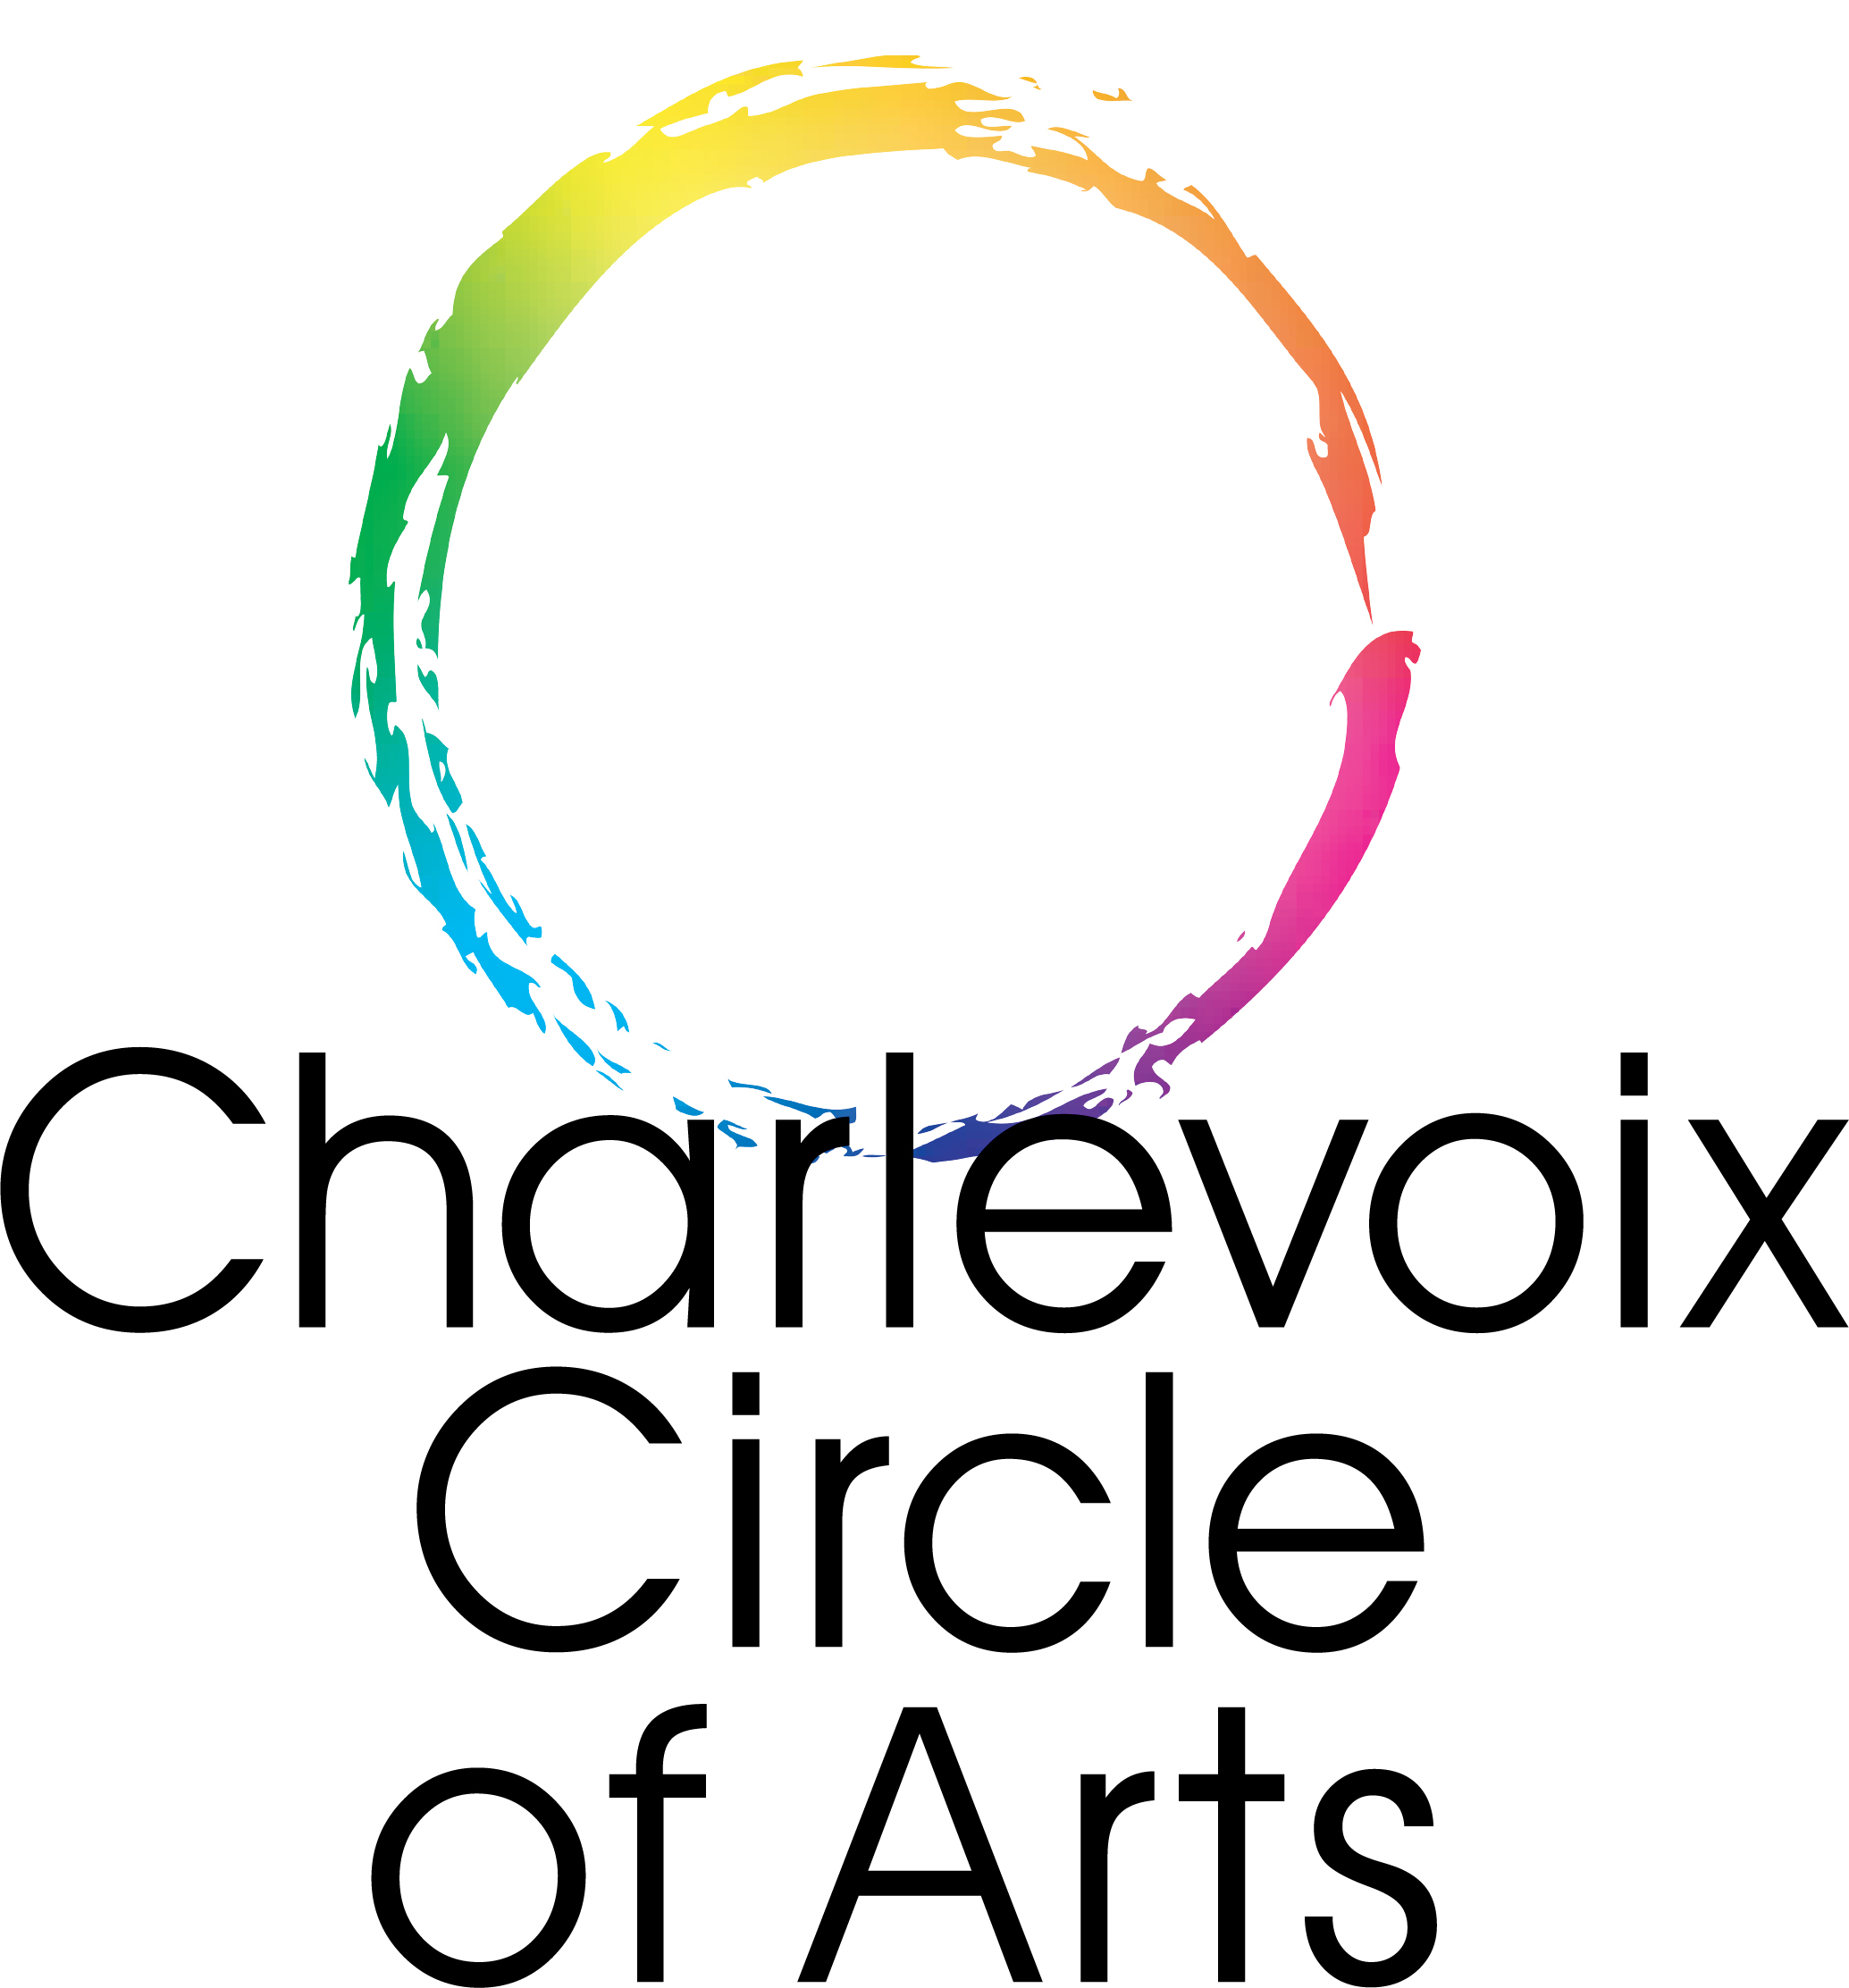 Charlevoix Circle of Arts